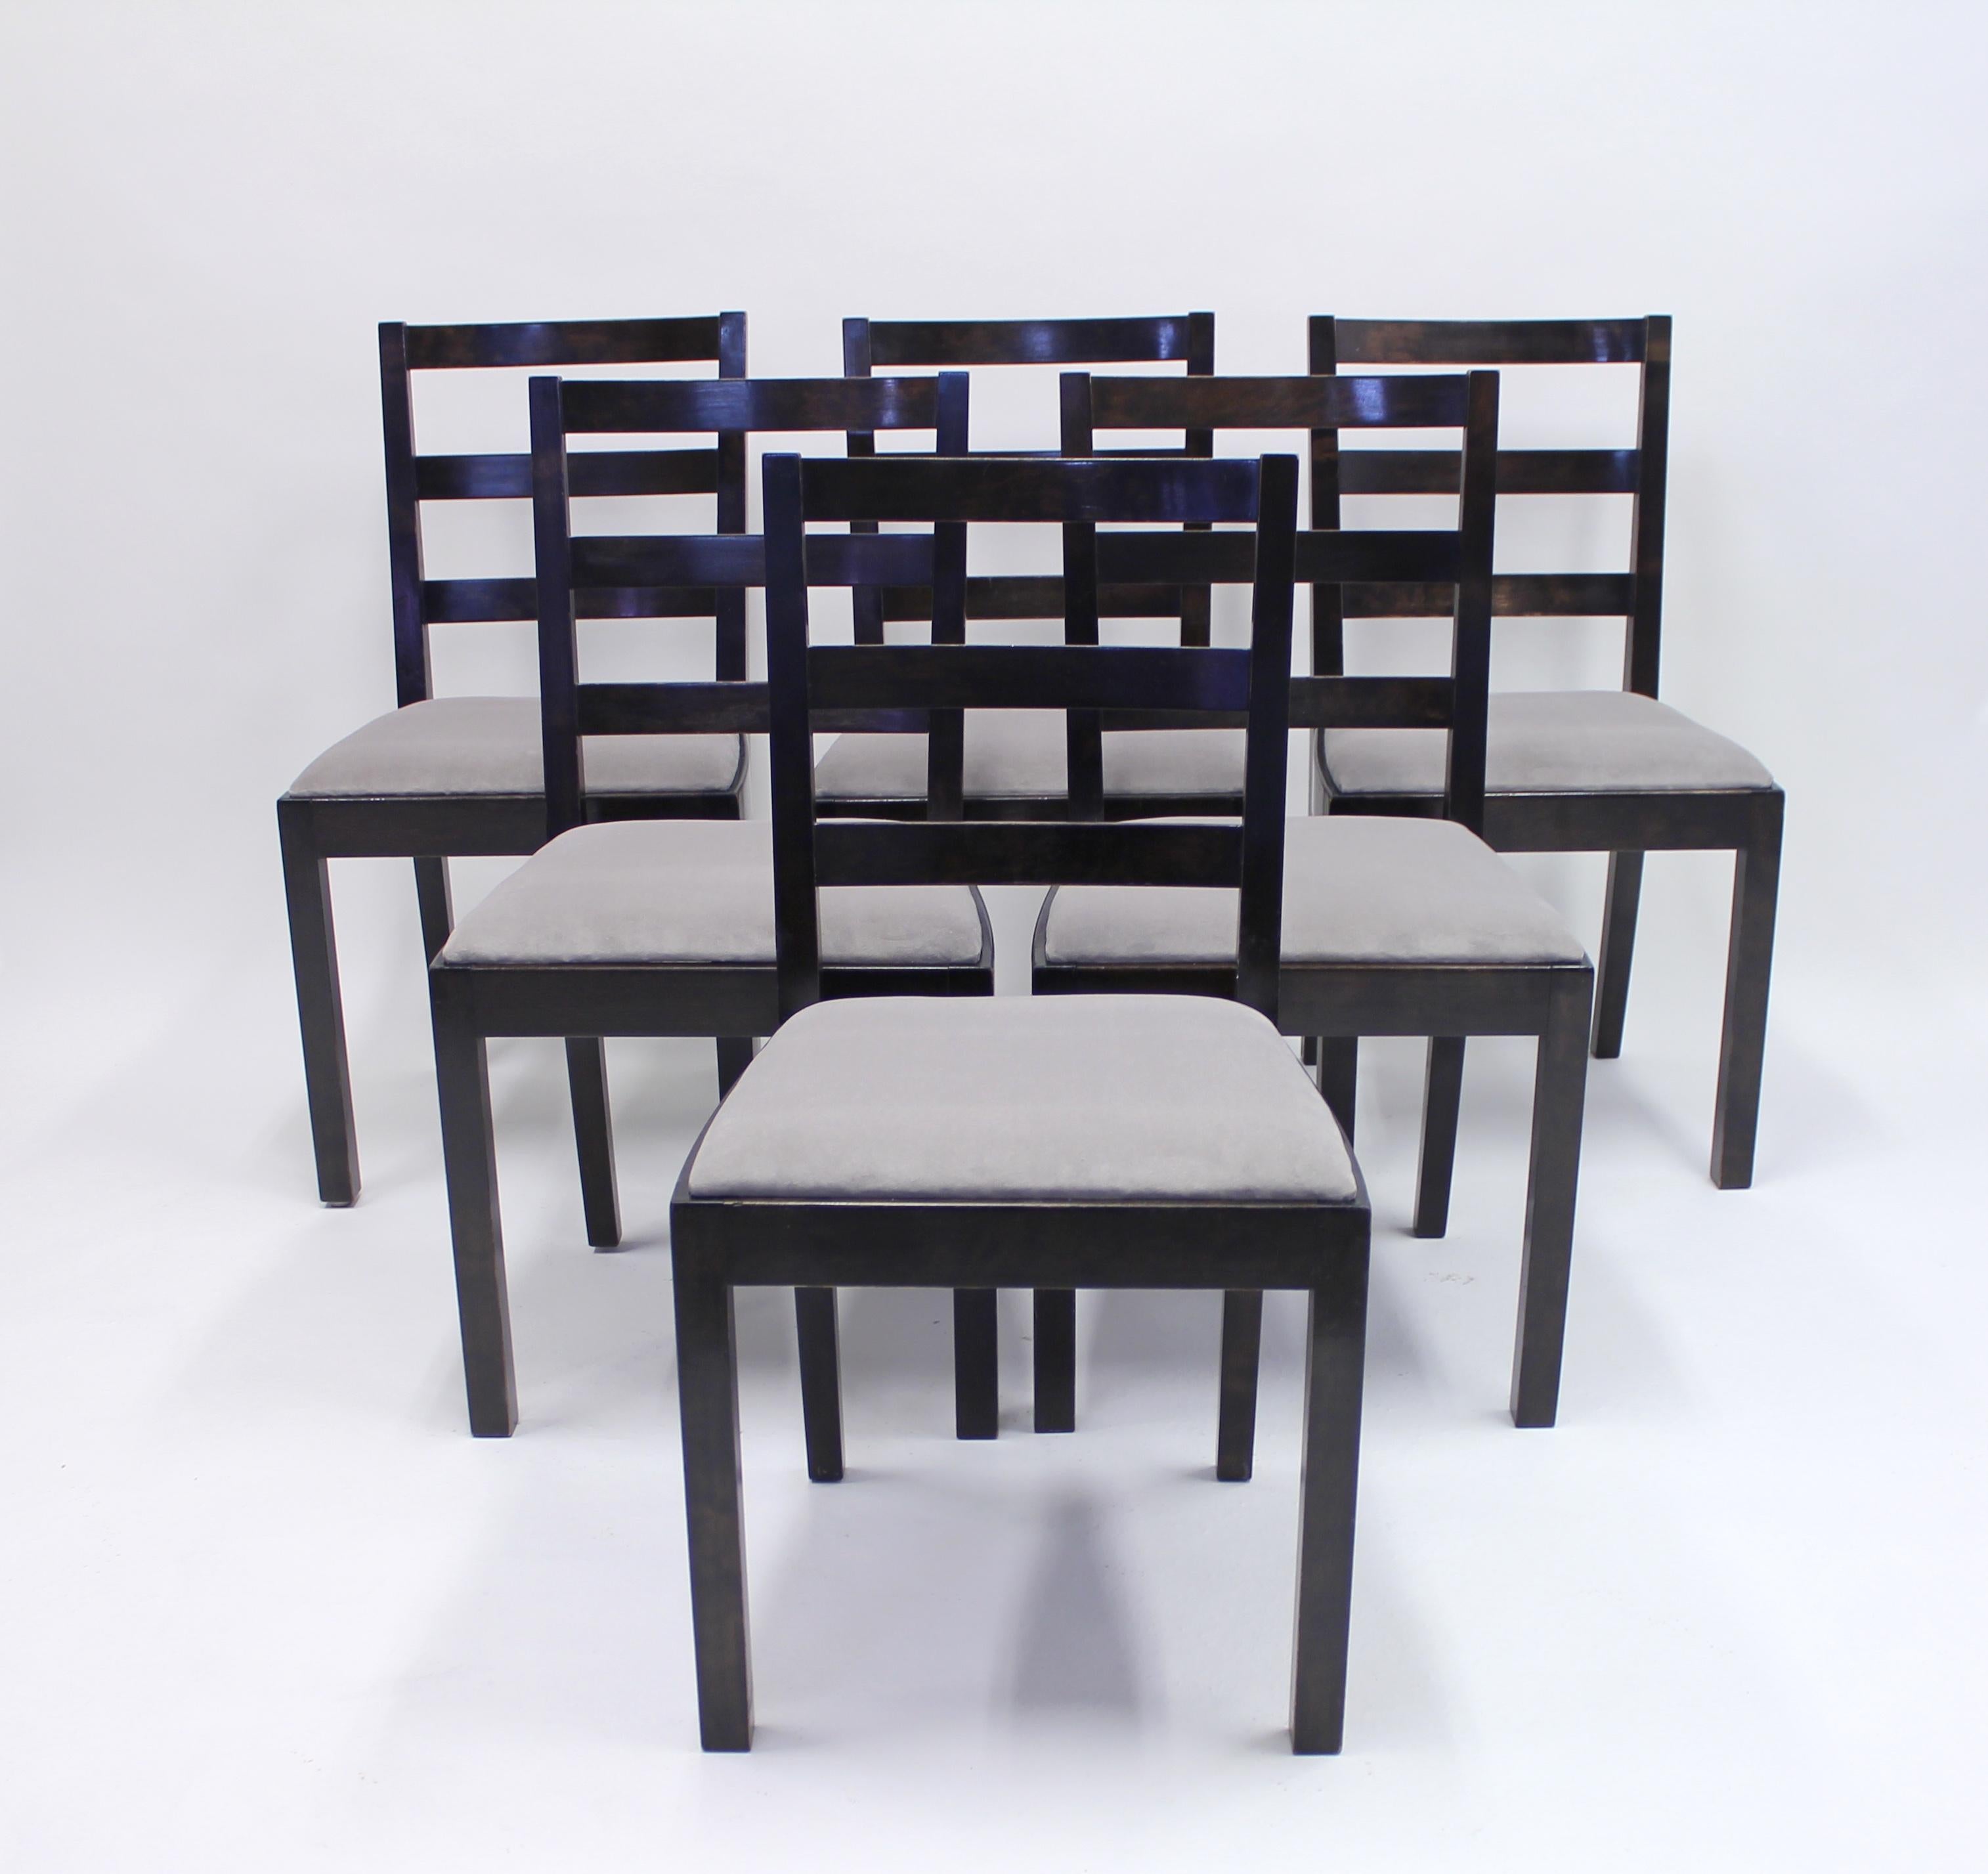 Scandinavian Modern Typenko Chairs by Axel Einar Hjorth for Nordiska Kompaniet, 1930s, Set of 6